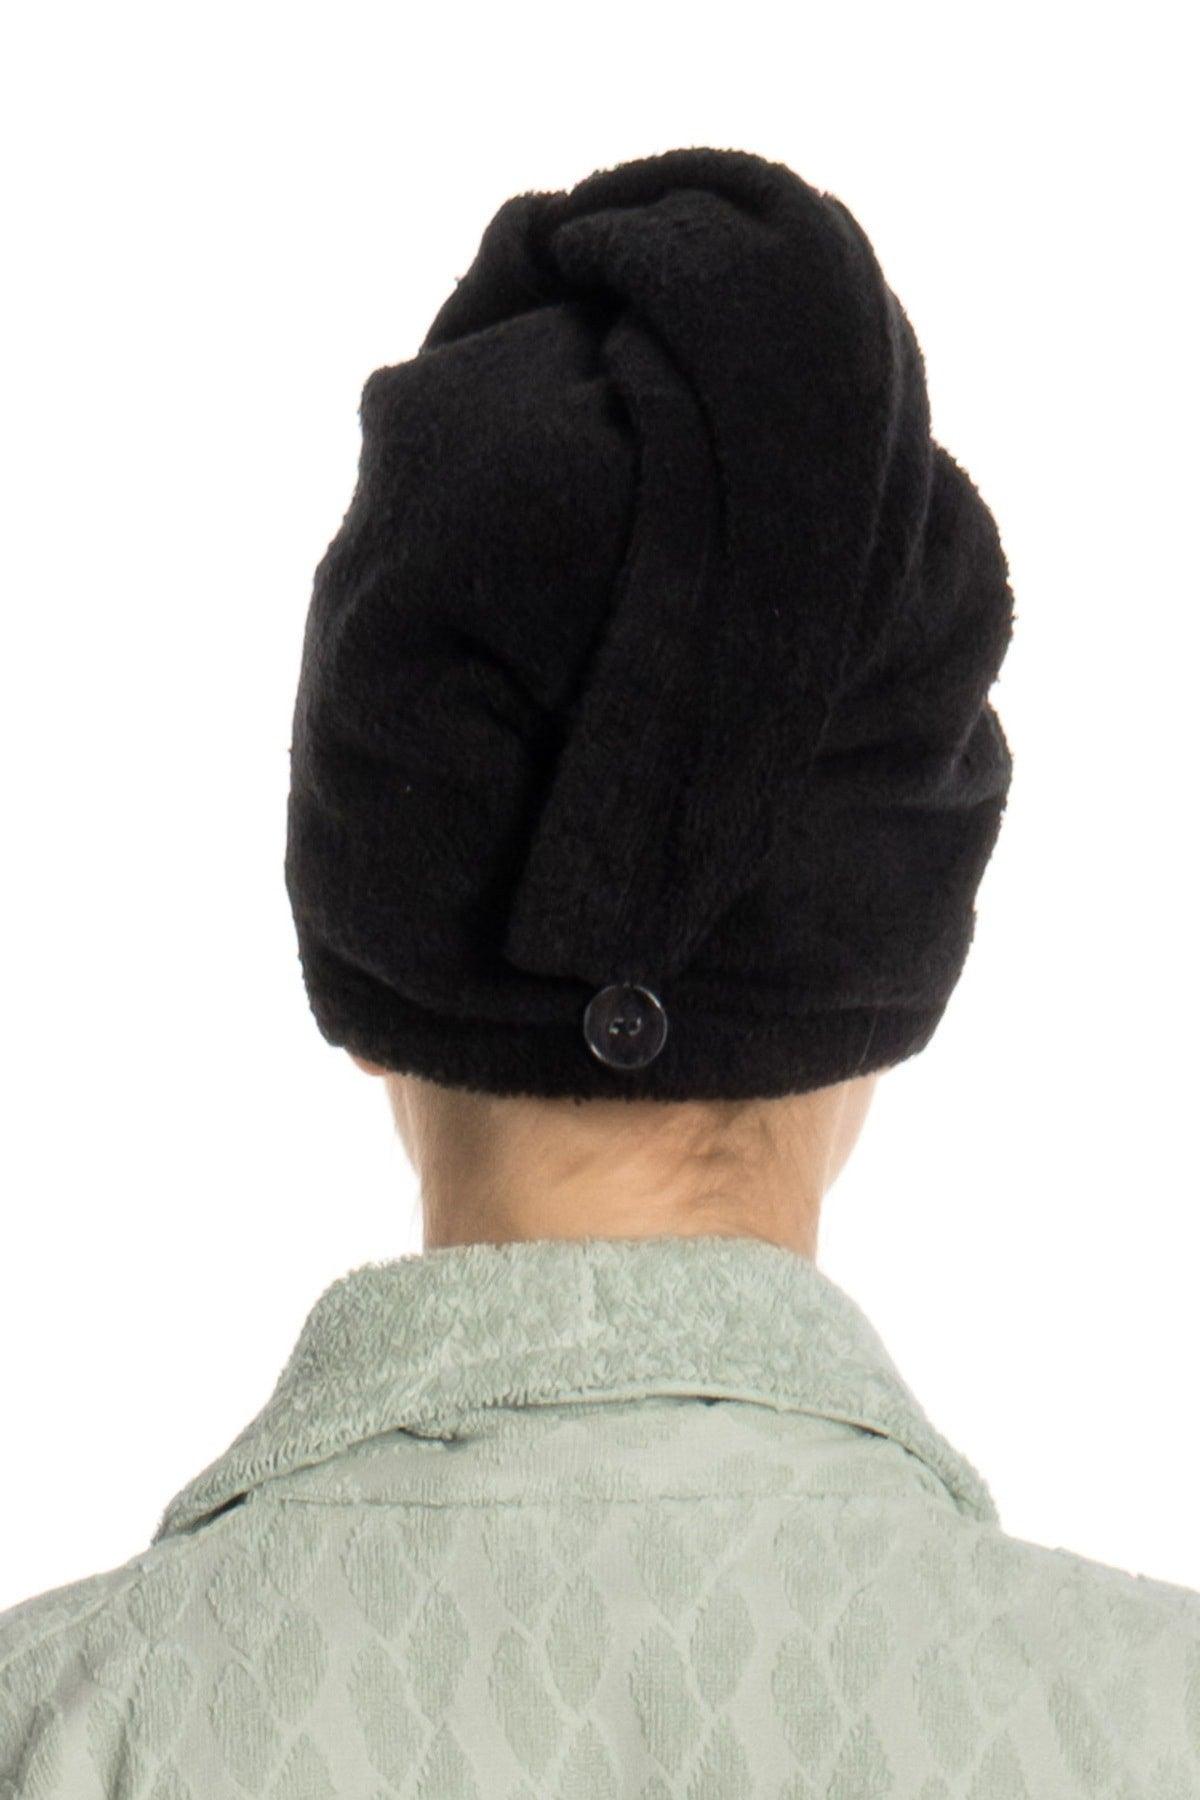 Flat Eponge Button Towel Black Hair Drying Cap - Swordslife